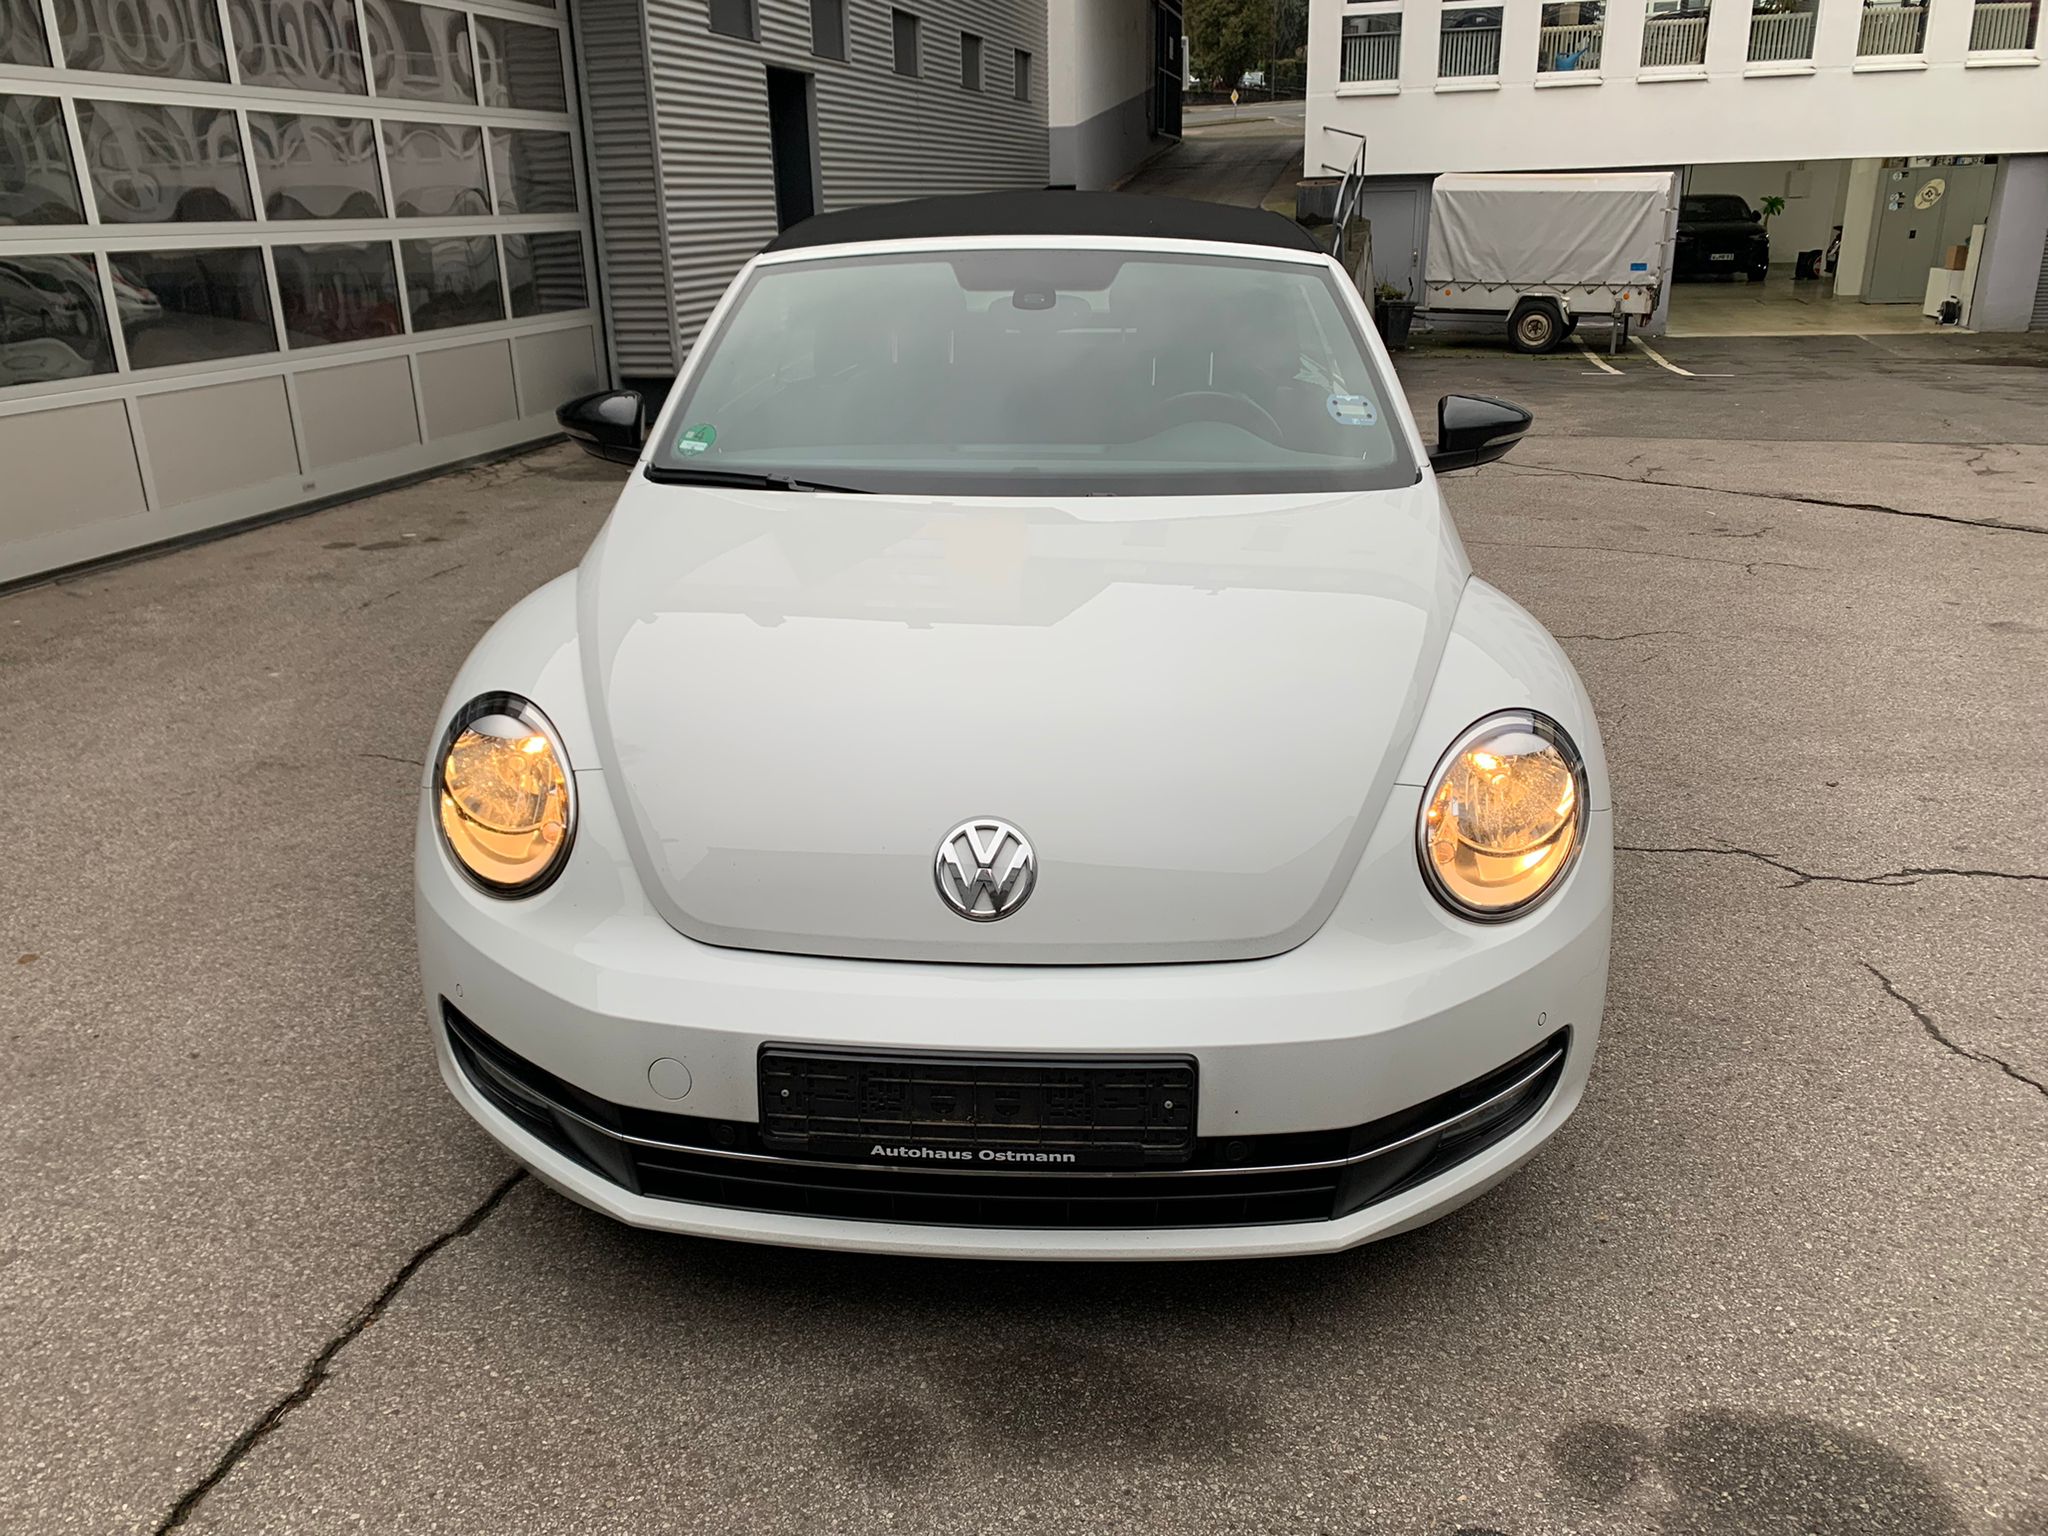 VW Beetle - Cabrio